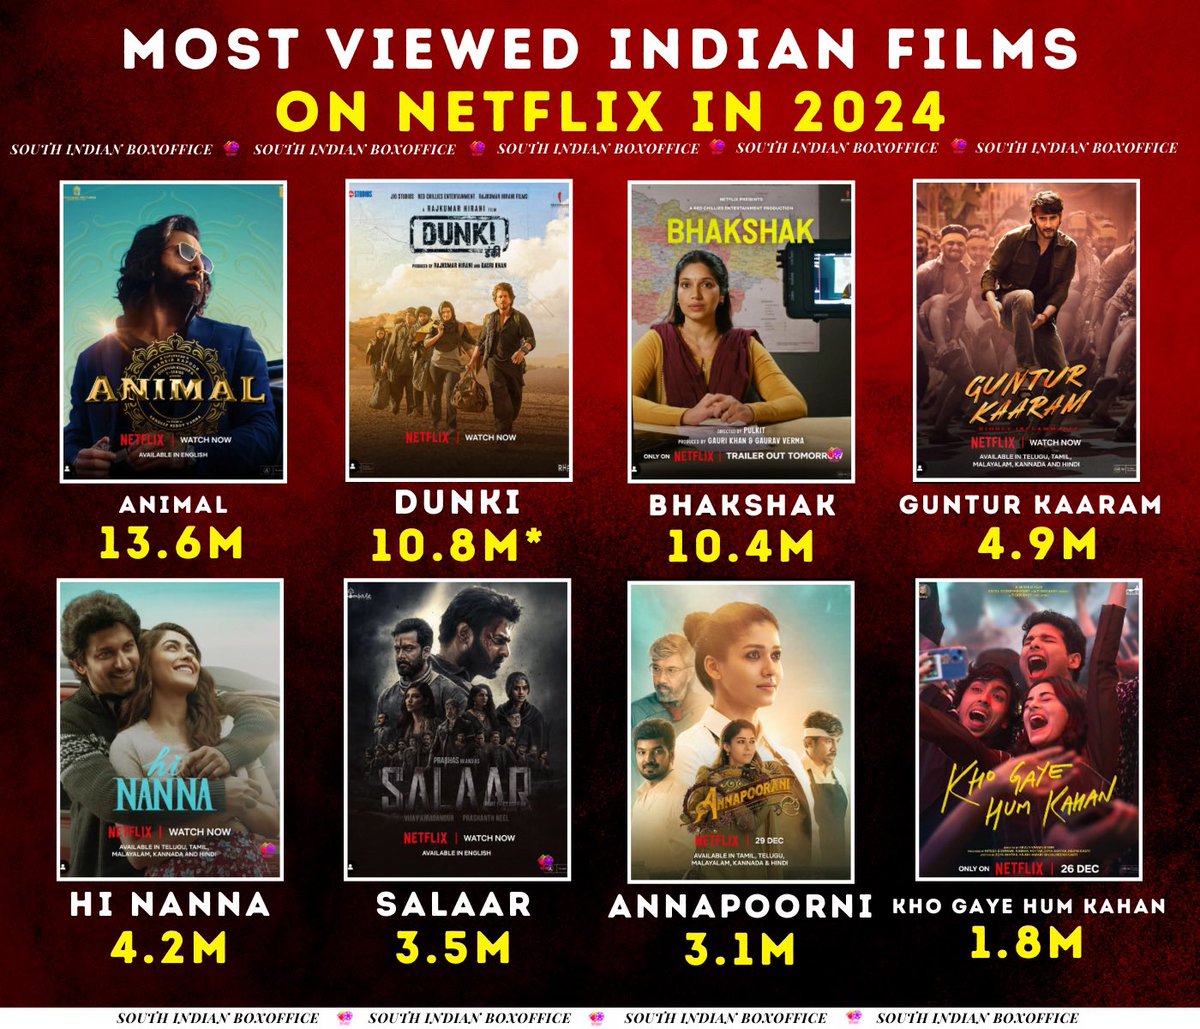 Most Viewed Indian Films on Netflix in 2024

1. #Animal - 13.6M
2. #Dunki - 10.8M*
3. #Bhakshak - 10.4M
4. #GunturKaaram - 4.9M
5. #HiNanna - 4.2M
6. #Salaar - 3.5M
7. #Annapoorni - 3.1M
8. #KhoGayeHumKahan - 1.8M

Can #Dunki Beat Animal ?